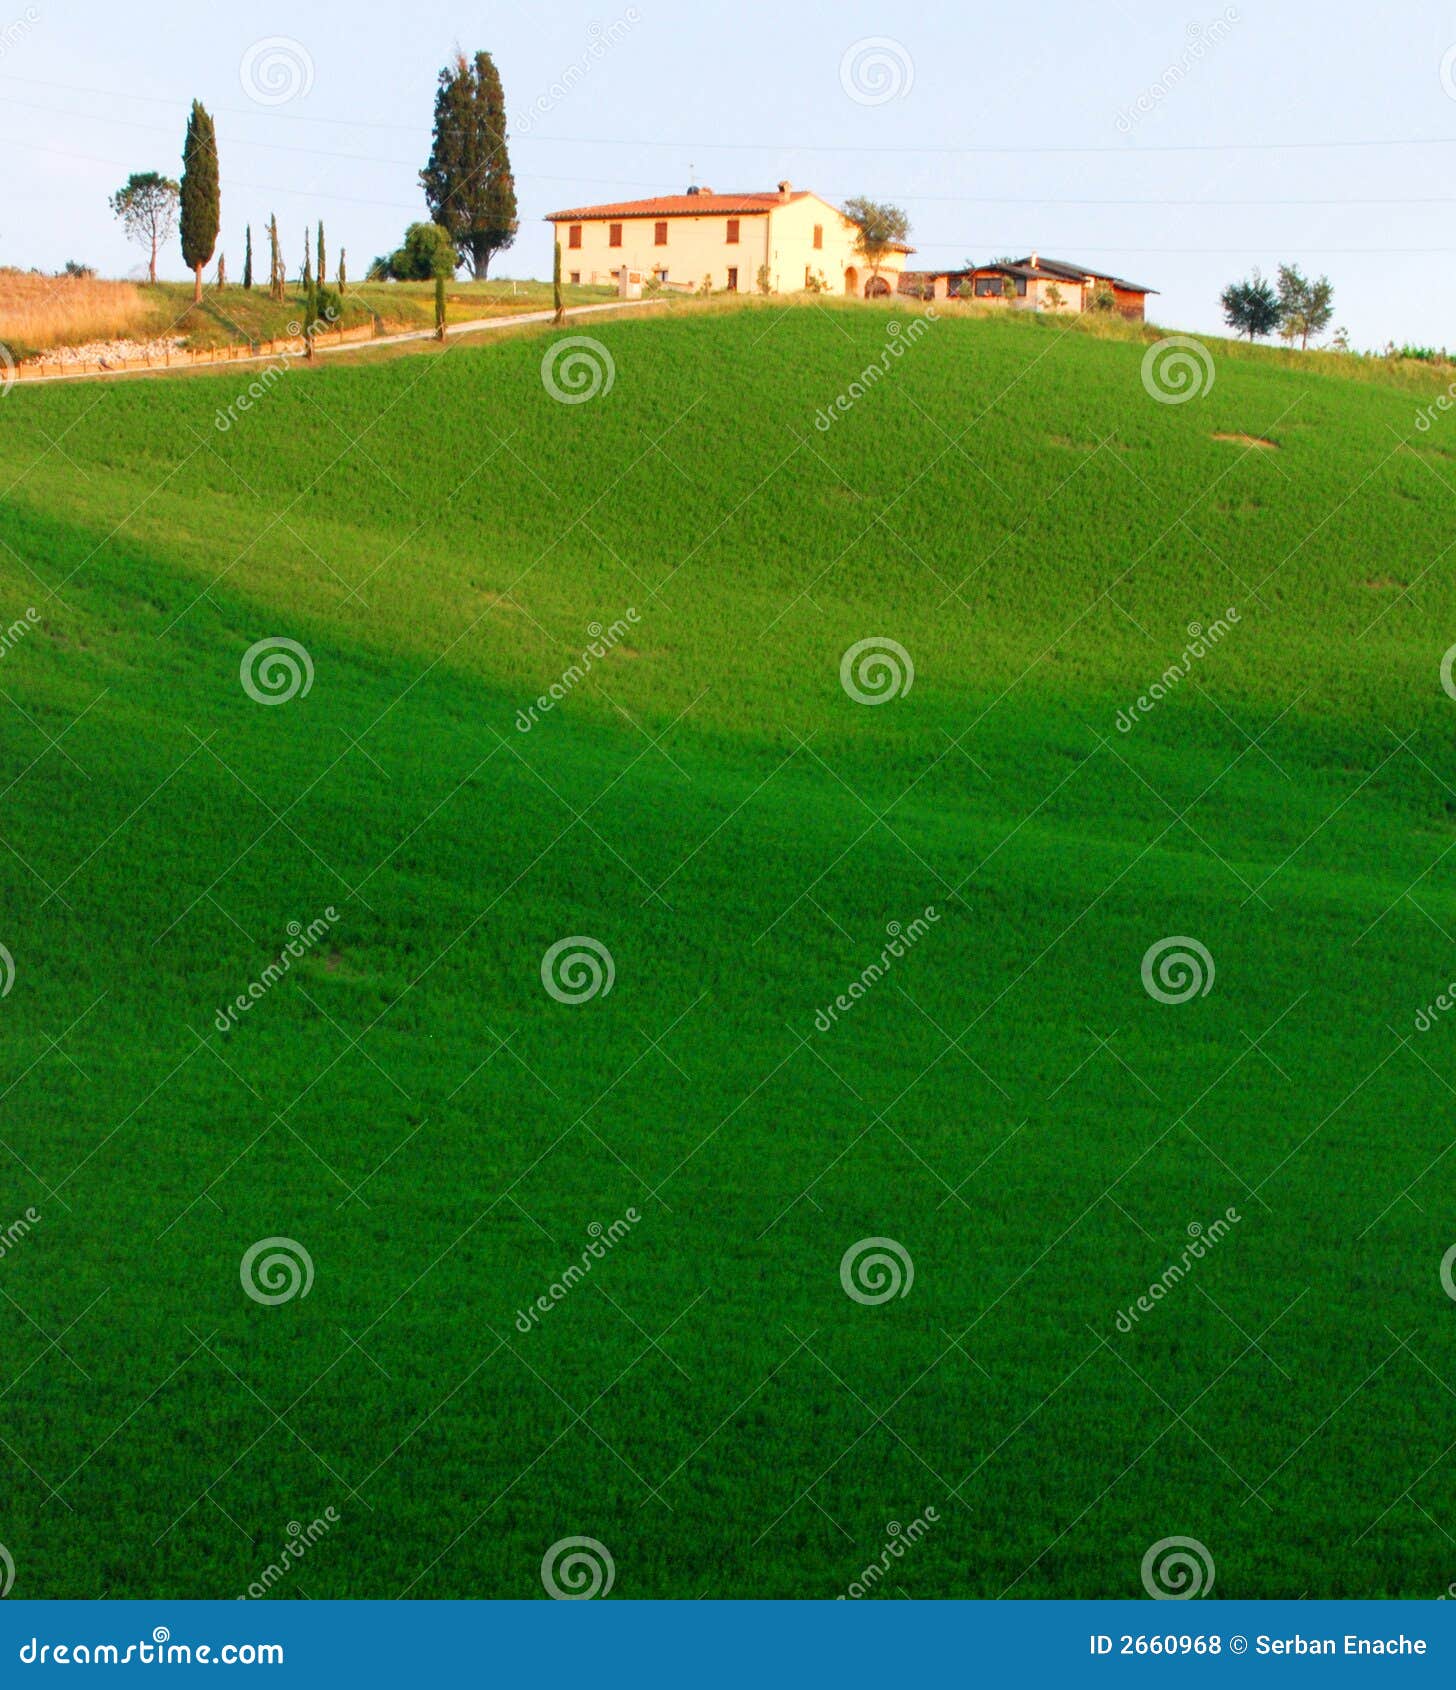 farmland in tuscany